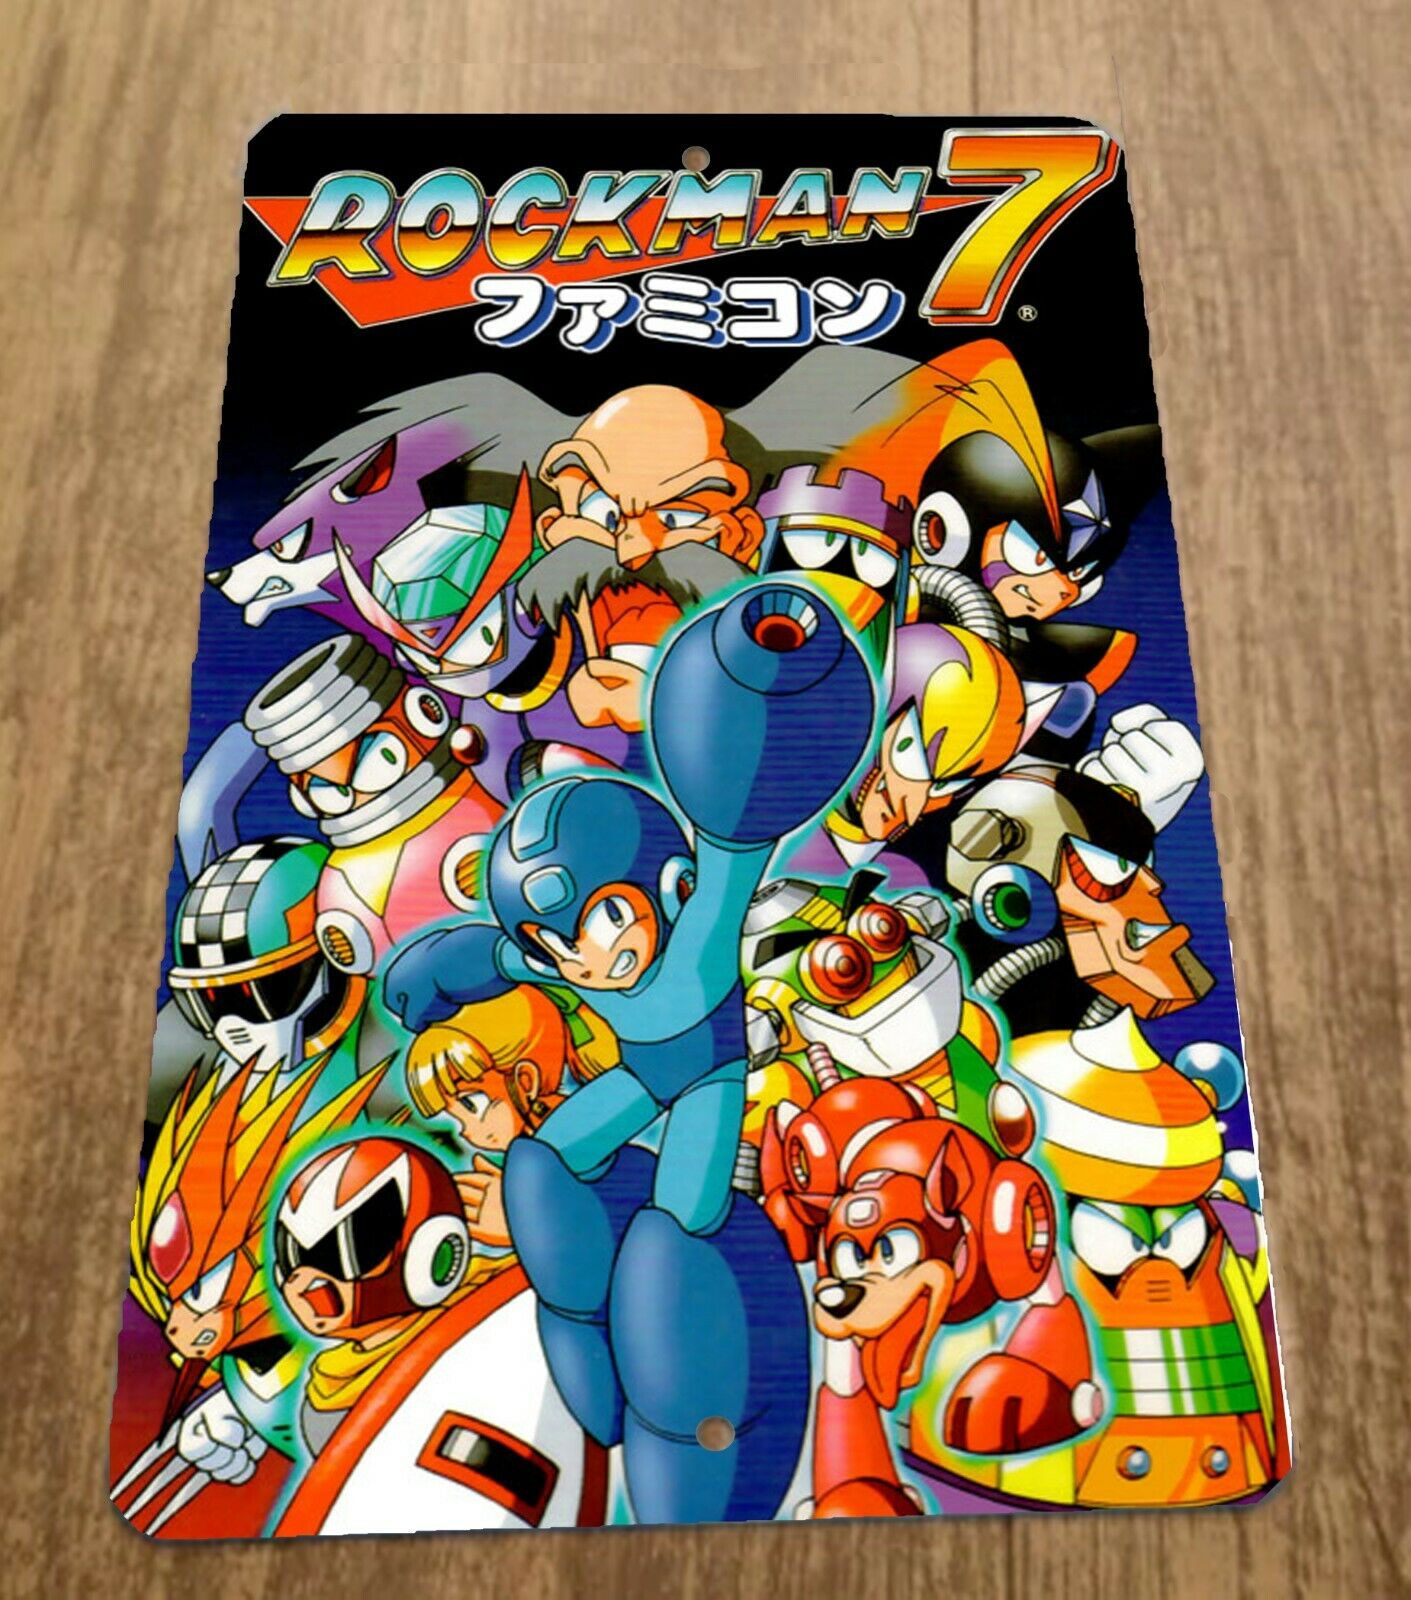 Rocketman 7 Mega Man Artwork 8x12 Metal Wall Sign Retro 80s Video Game Arcade